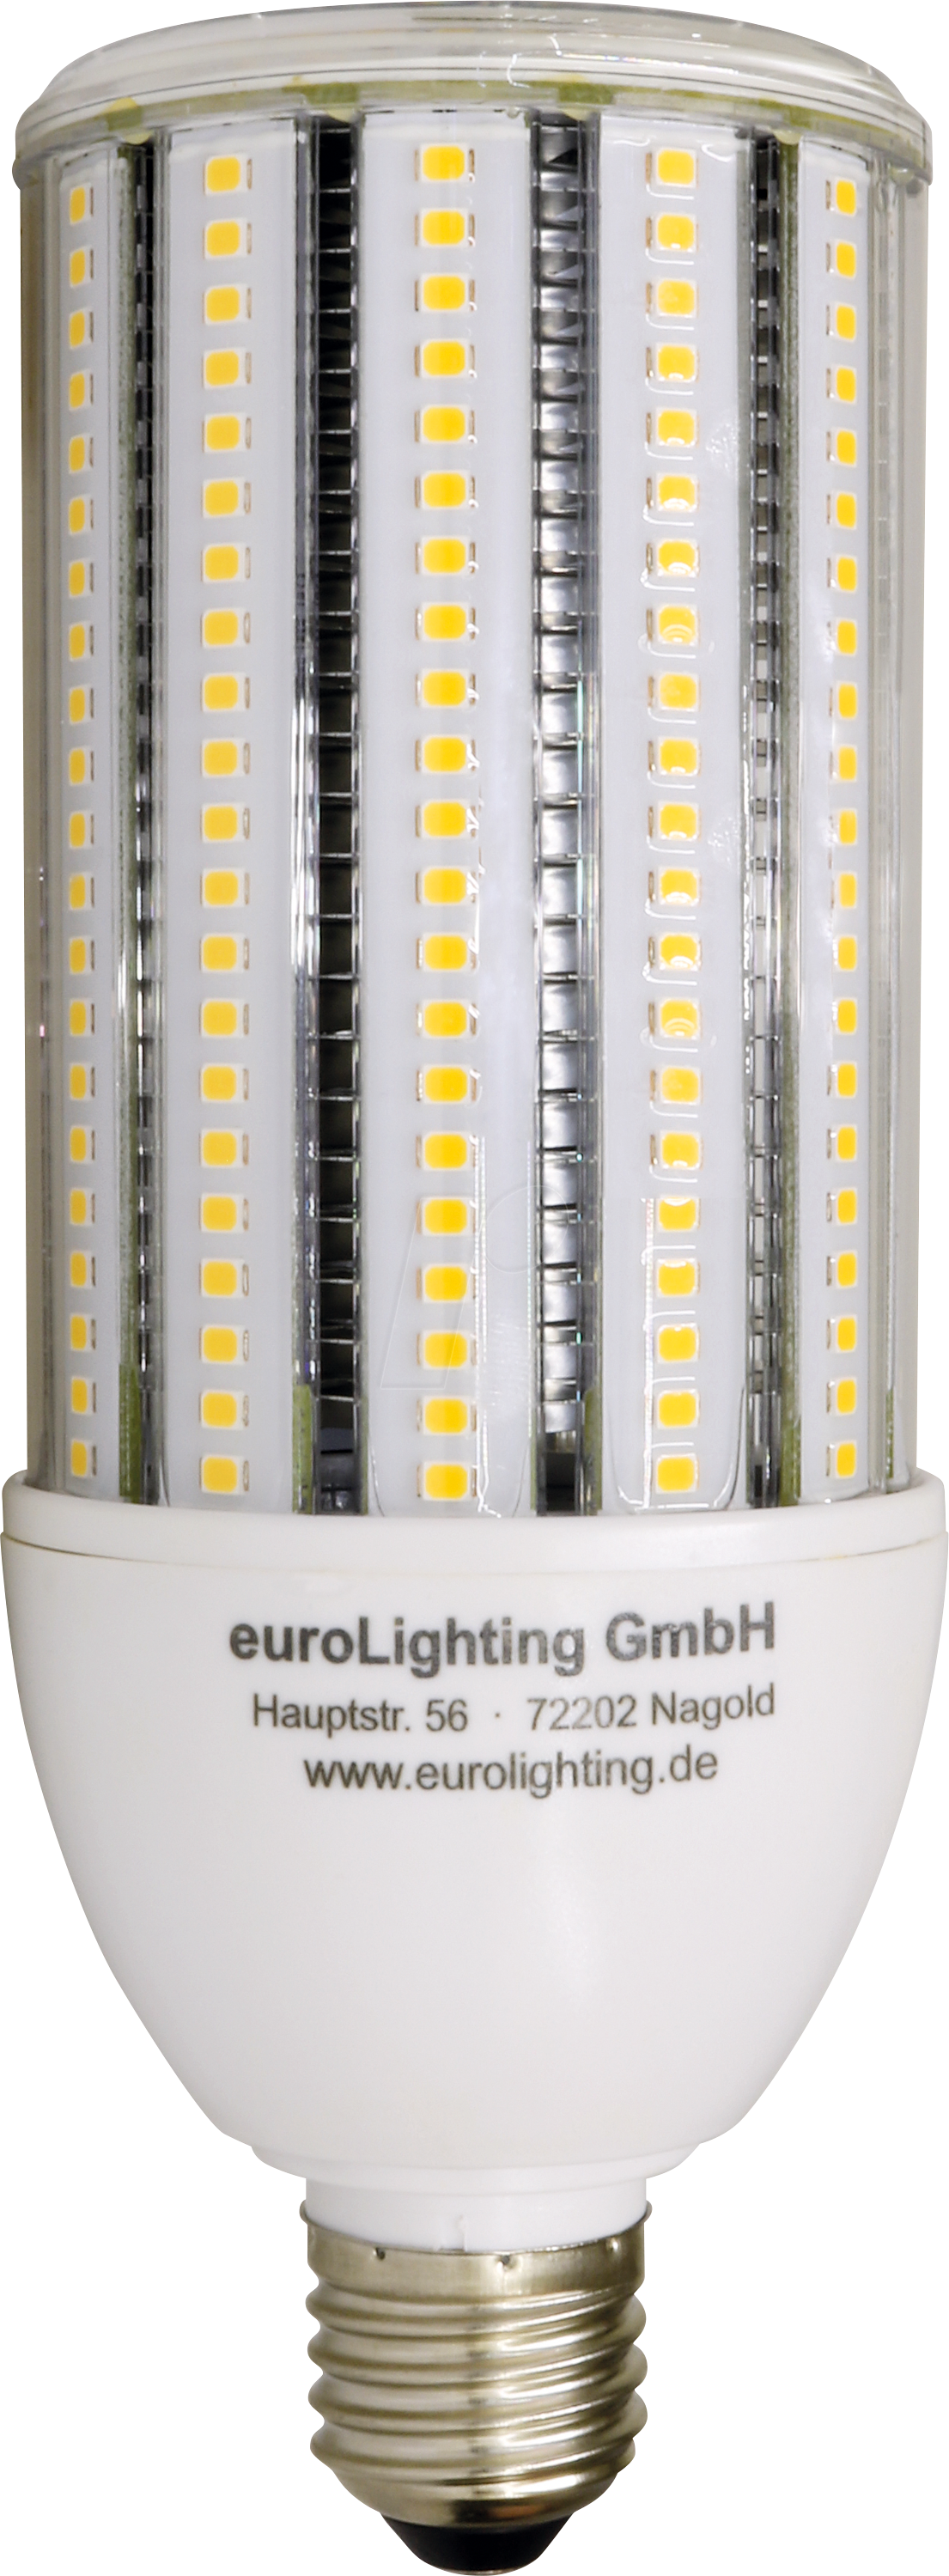 EURL 69DAC00006 - LED-Lampe E27, Cornbulb, 30 W, 3960 lm, 3000 K, ESSB von EUROLIGHTING